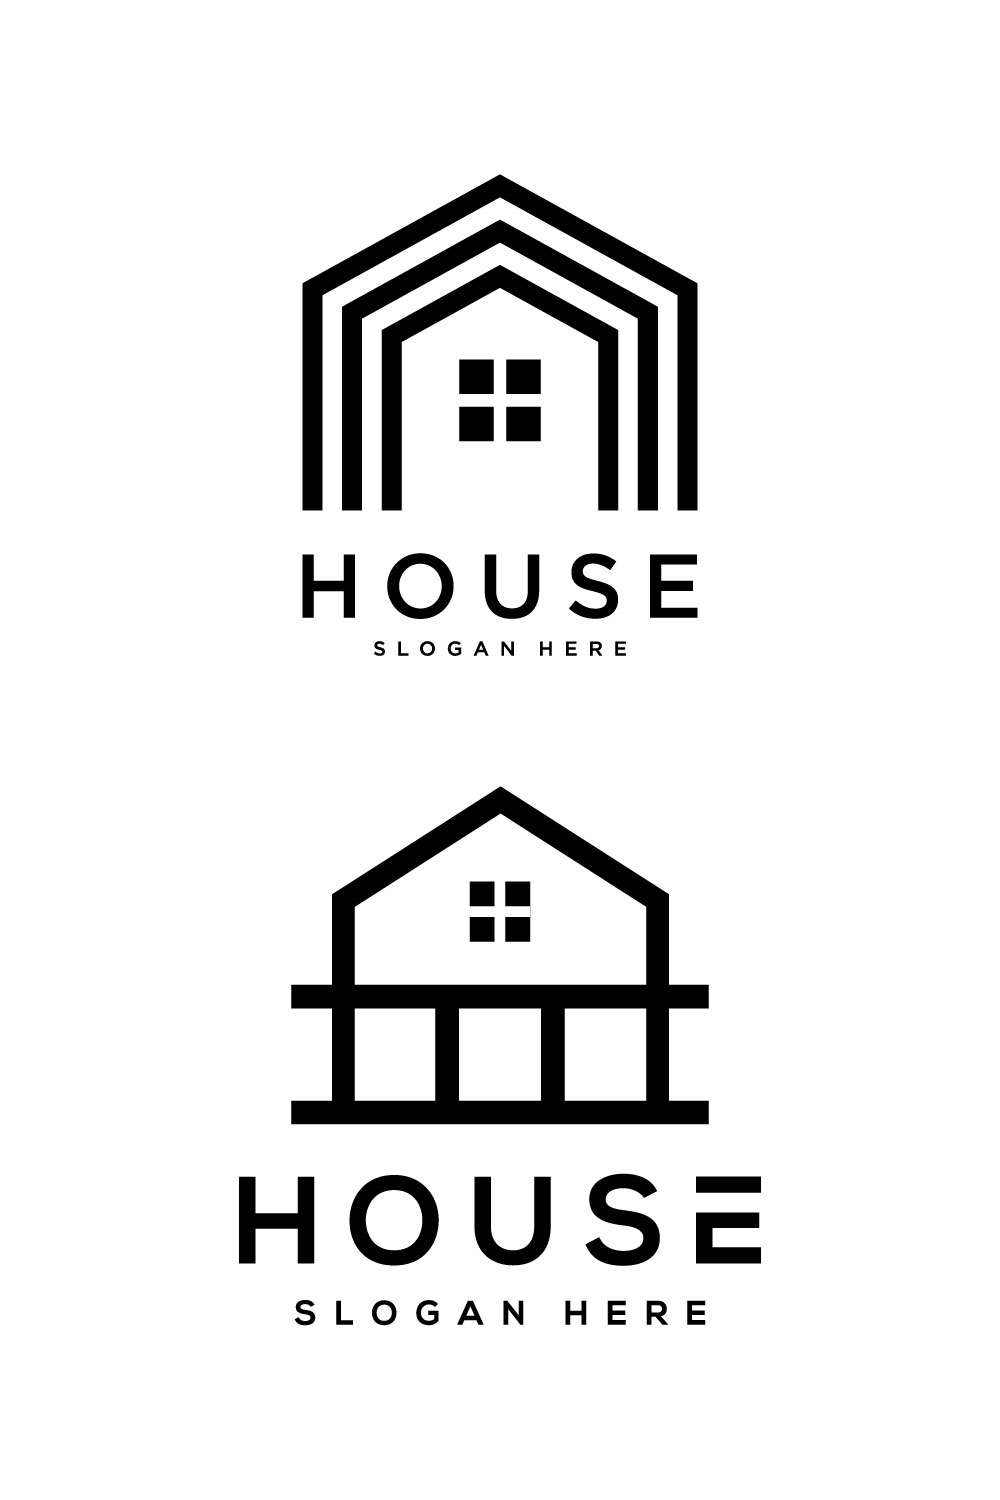 Home Real Estate Logo Vector Design - Pinterest.